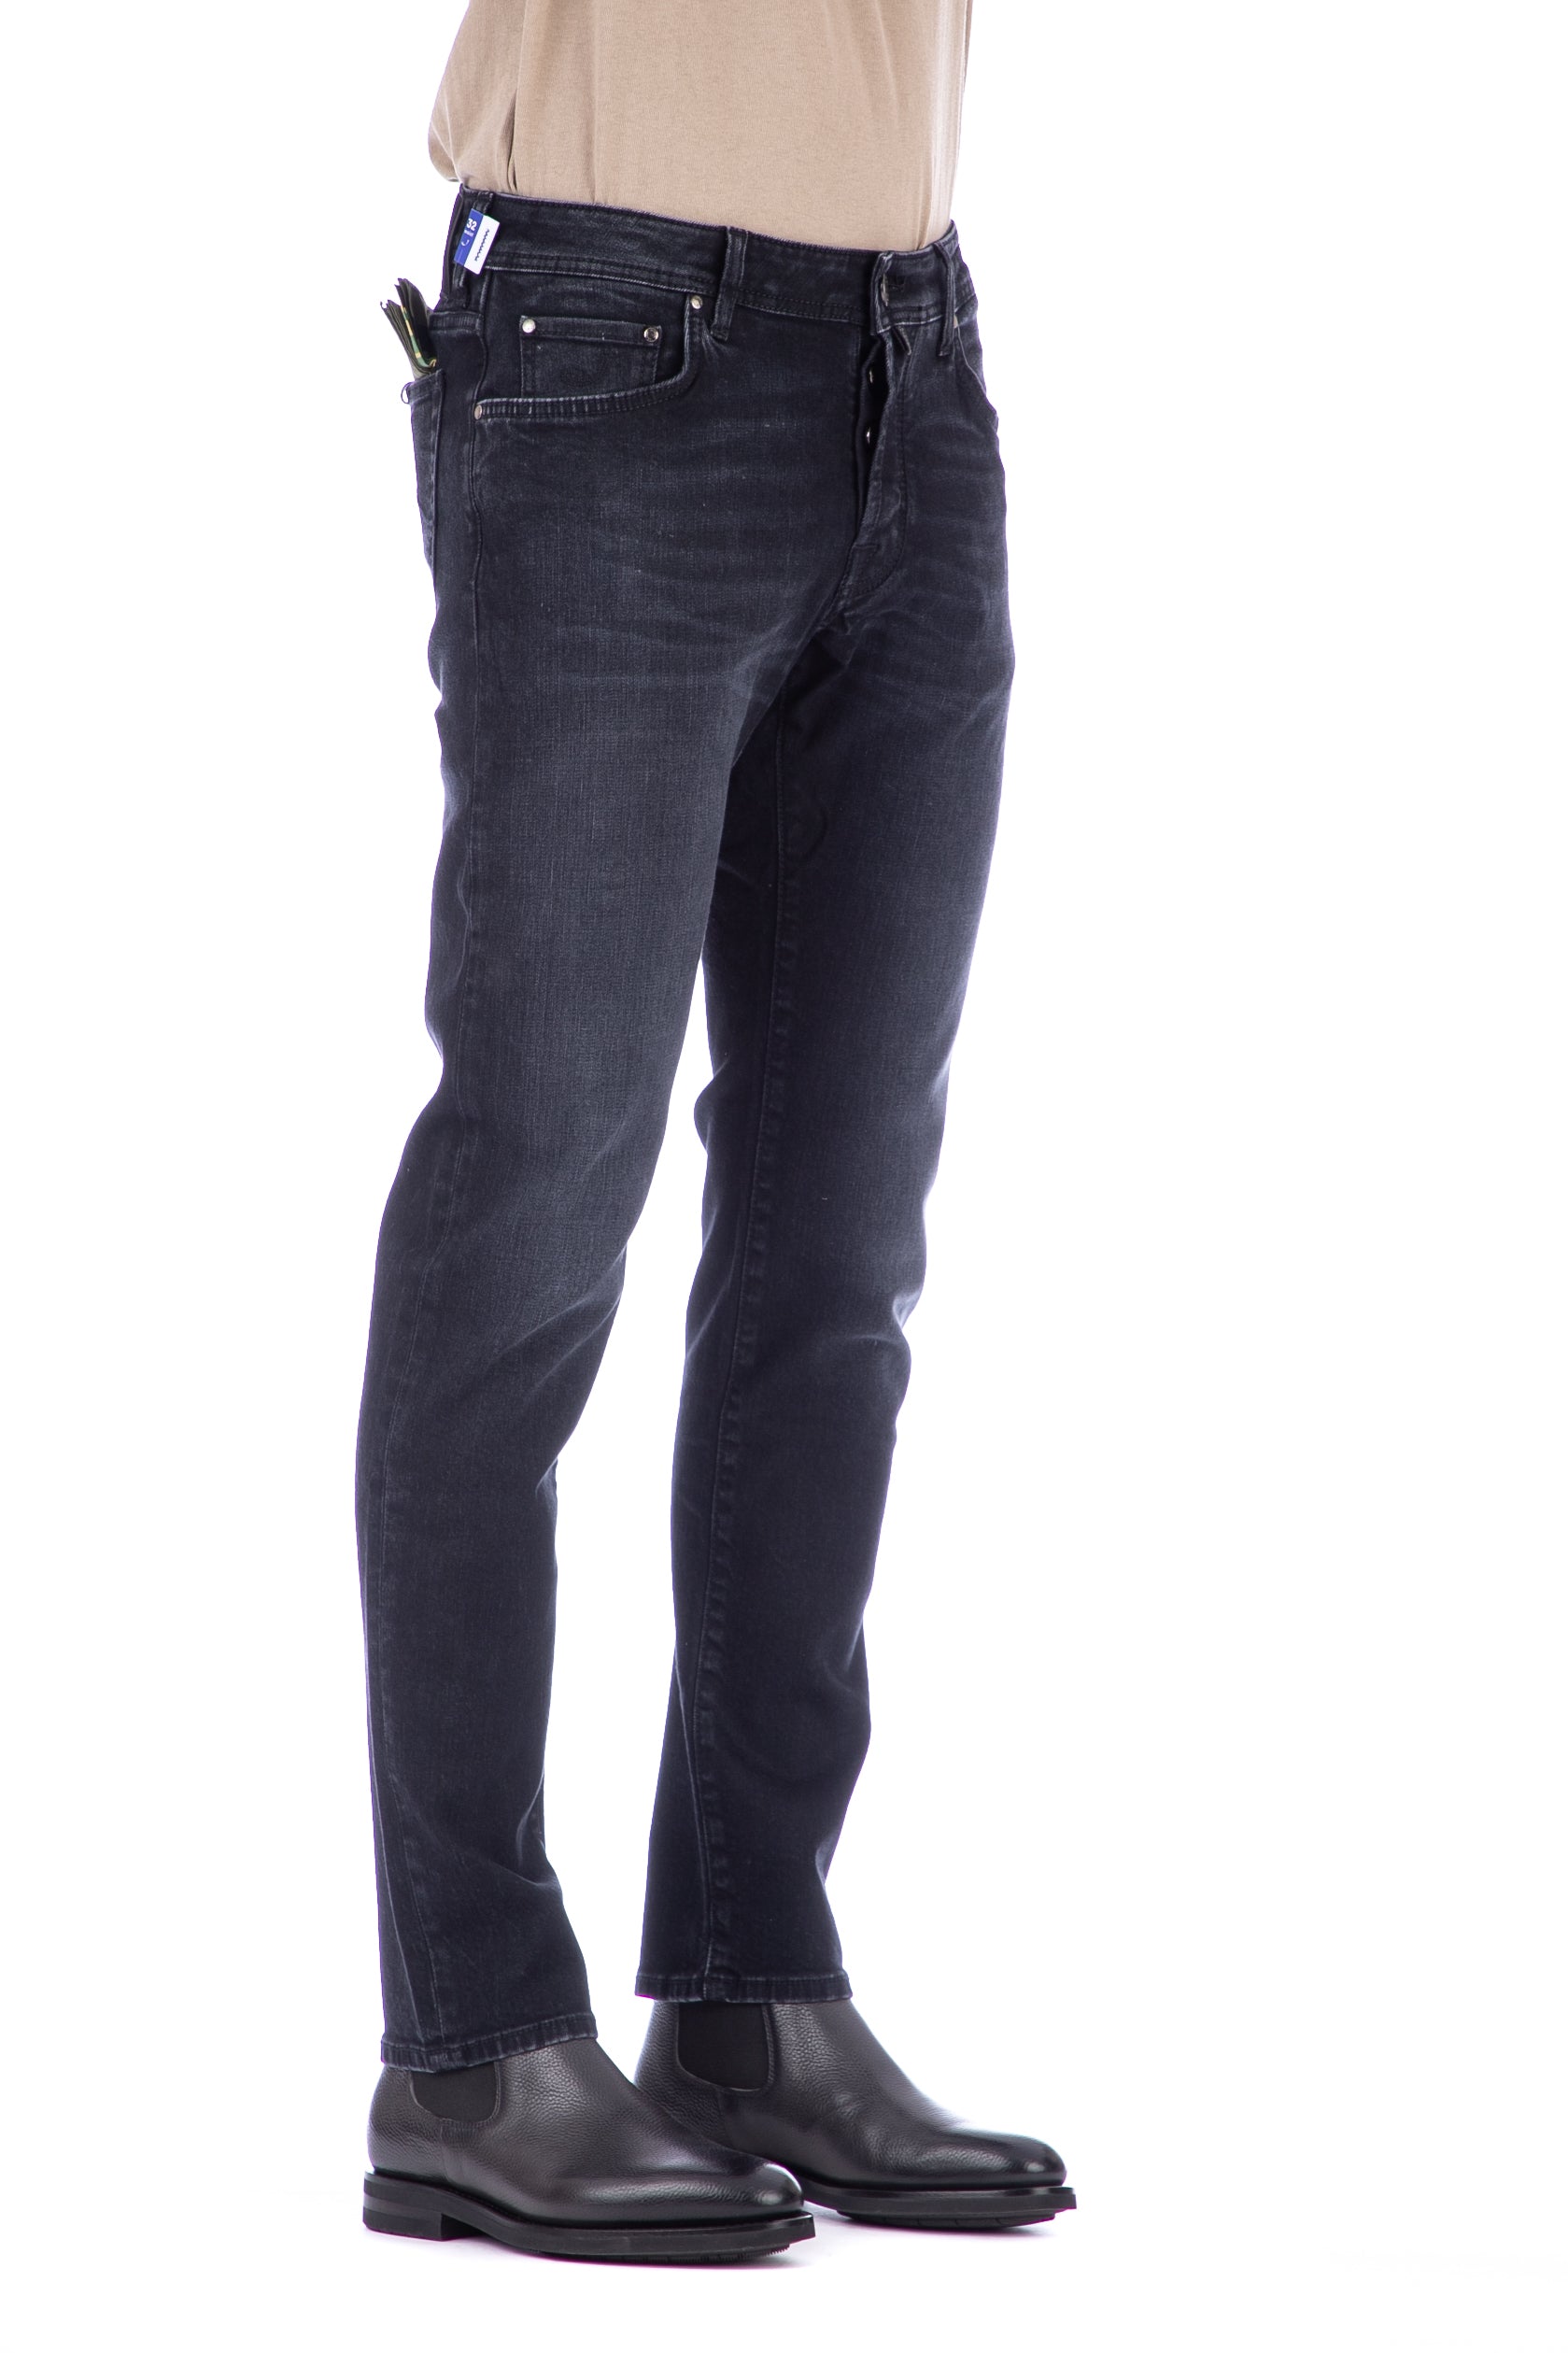 Black slim fit nickel cotton-modal jeans